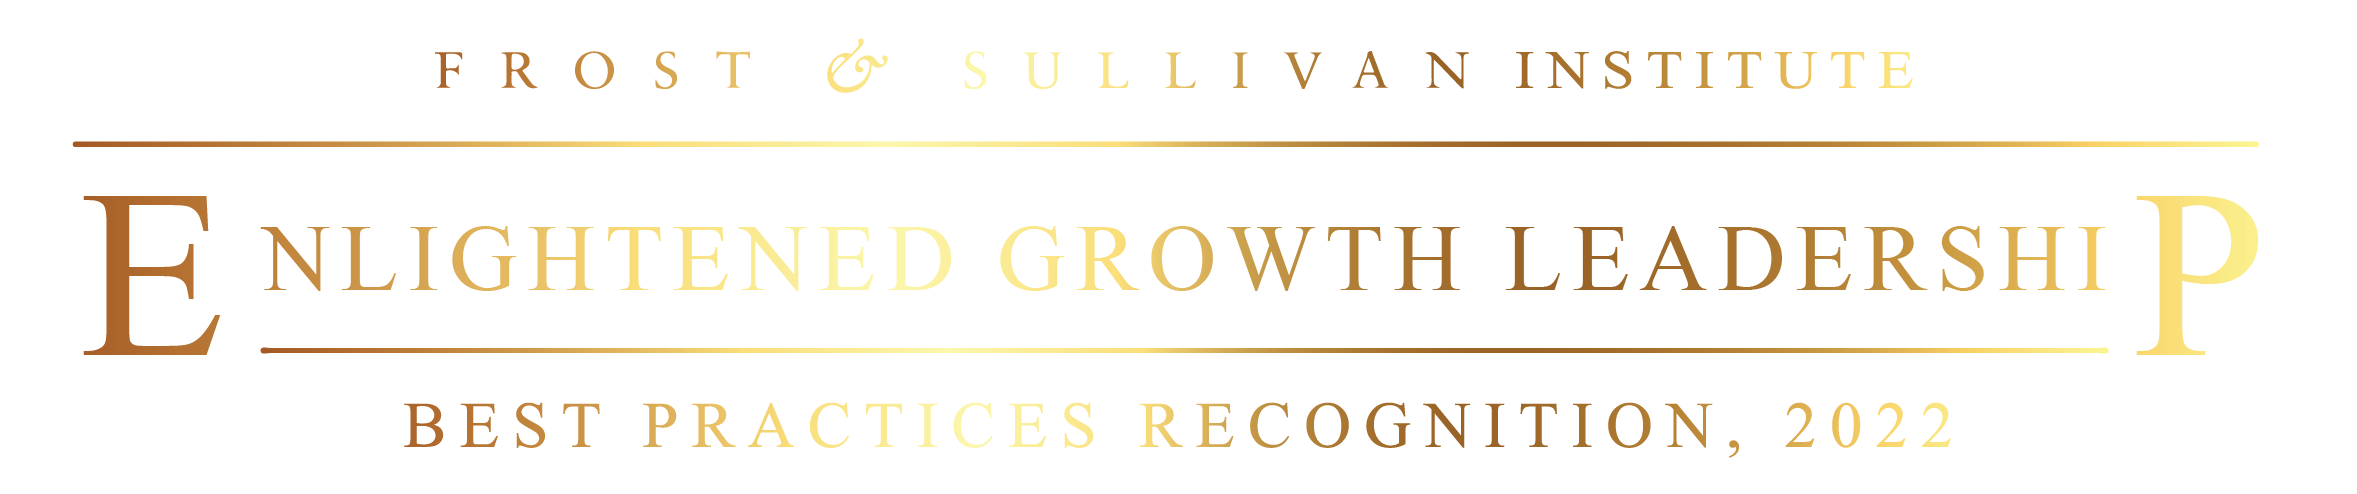 Frost & Sullivan Institute 2022 Enlightened Growth Leadership Award